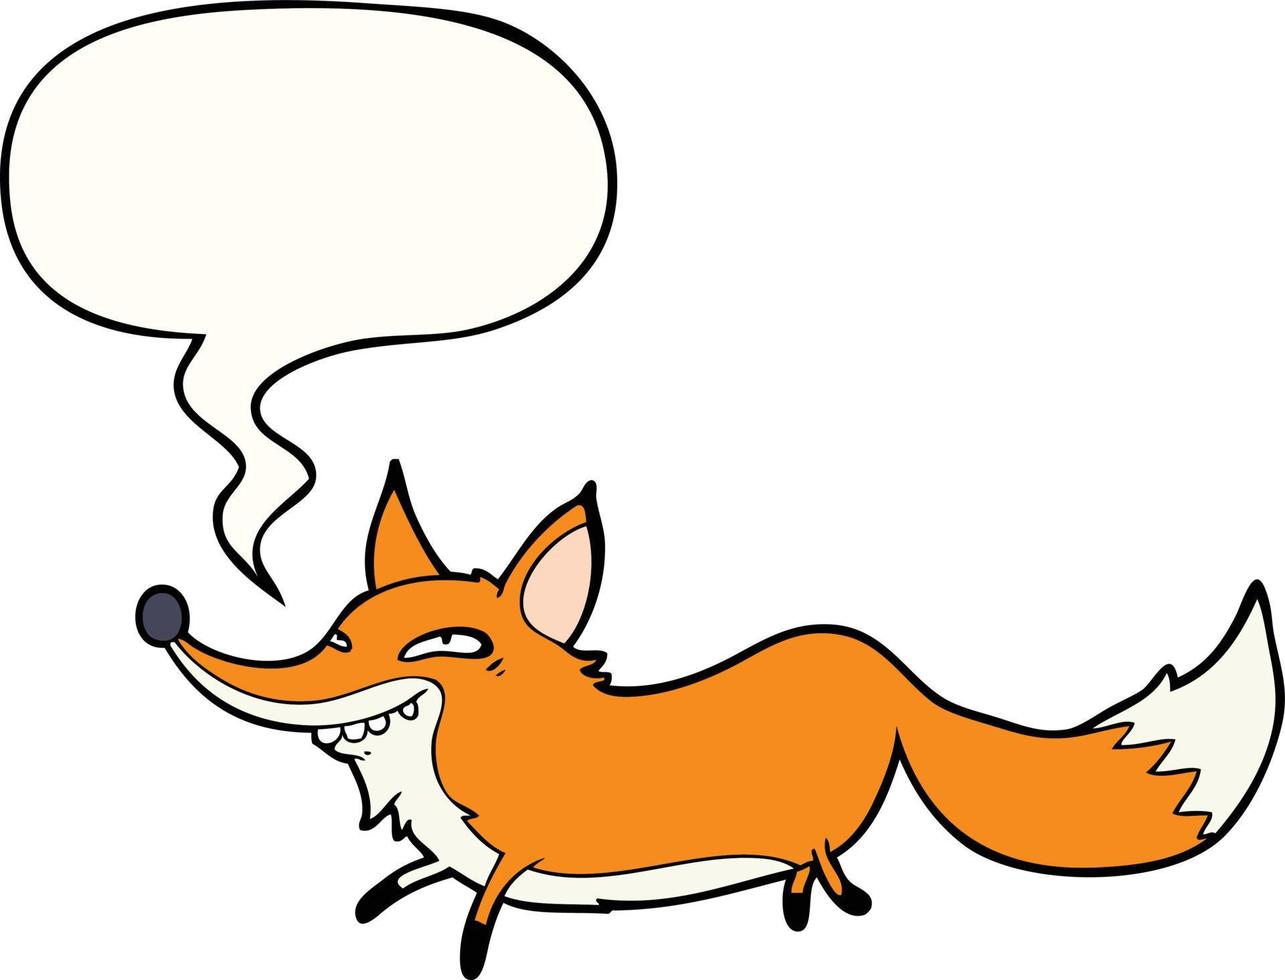 cute cartoon sly fox and speech bubble vector